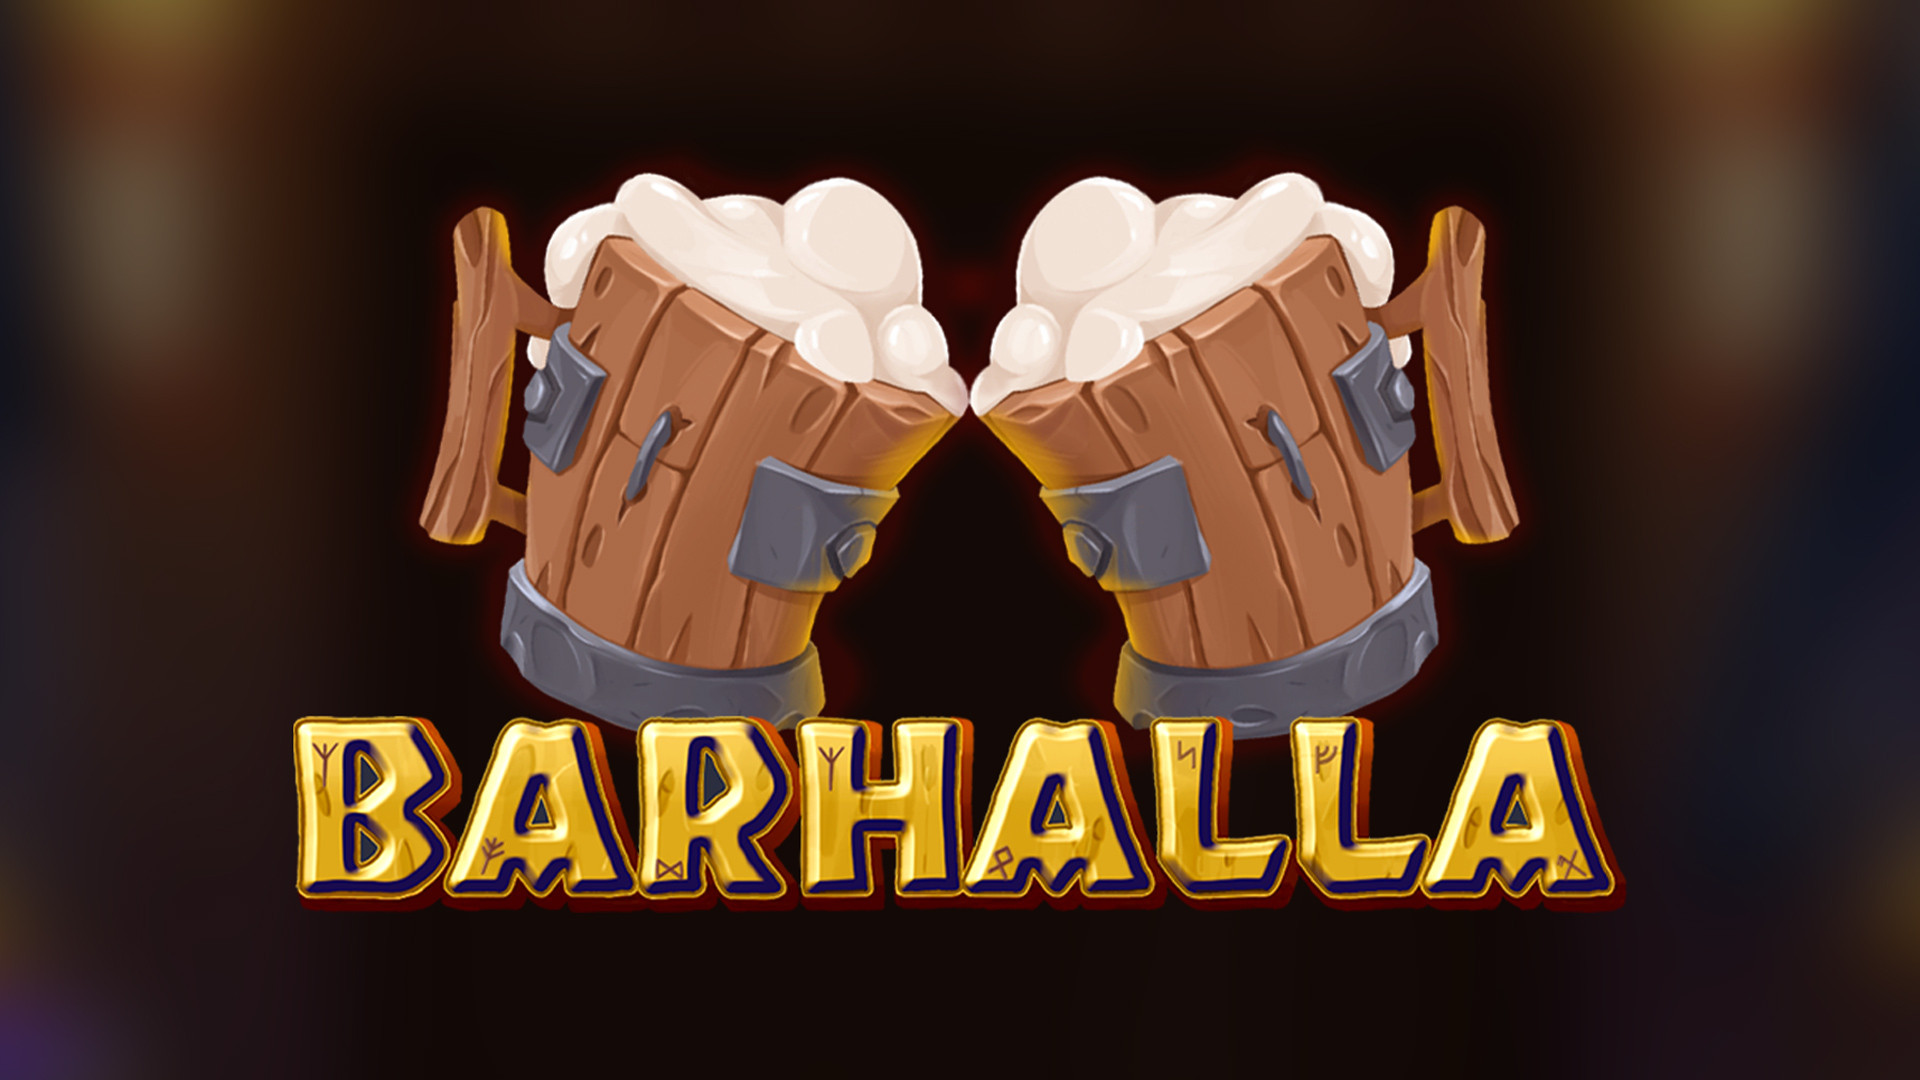 Barhalla